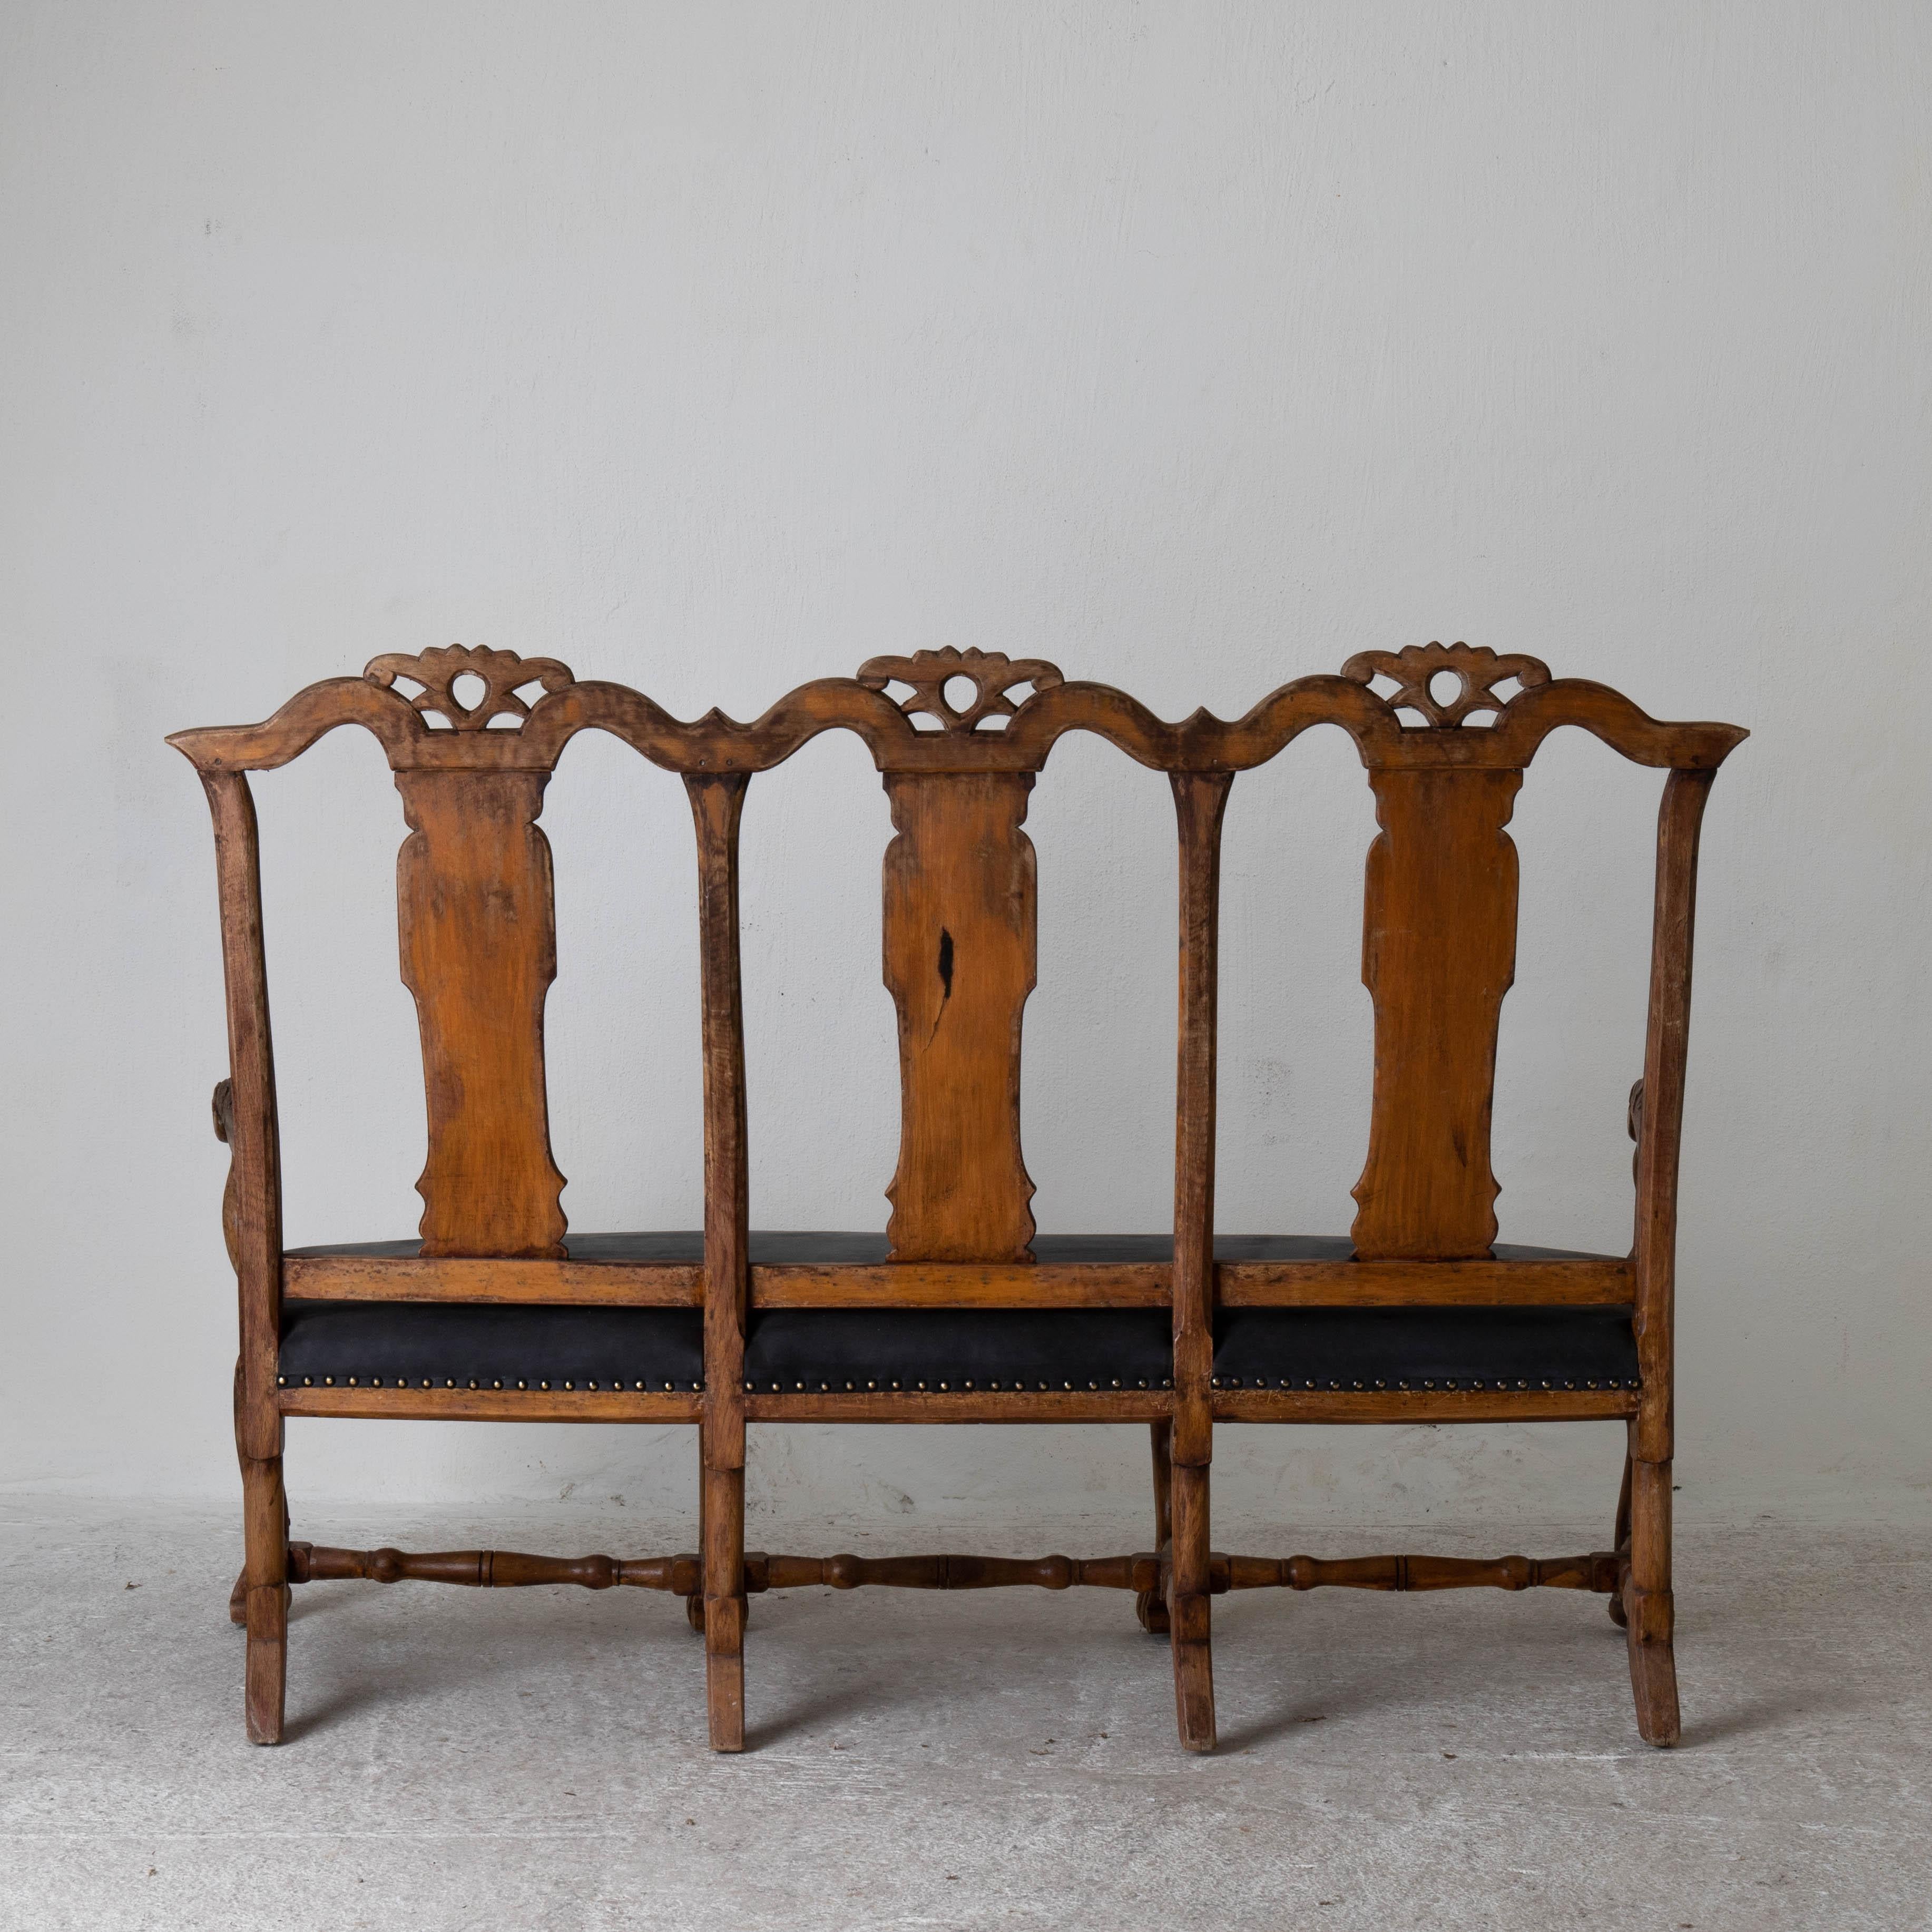 Sofa Bench Swedish Baroque Period 1650-1750 Brown Black, Sweden For Sale 4